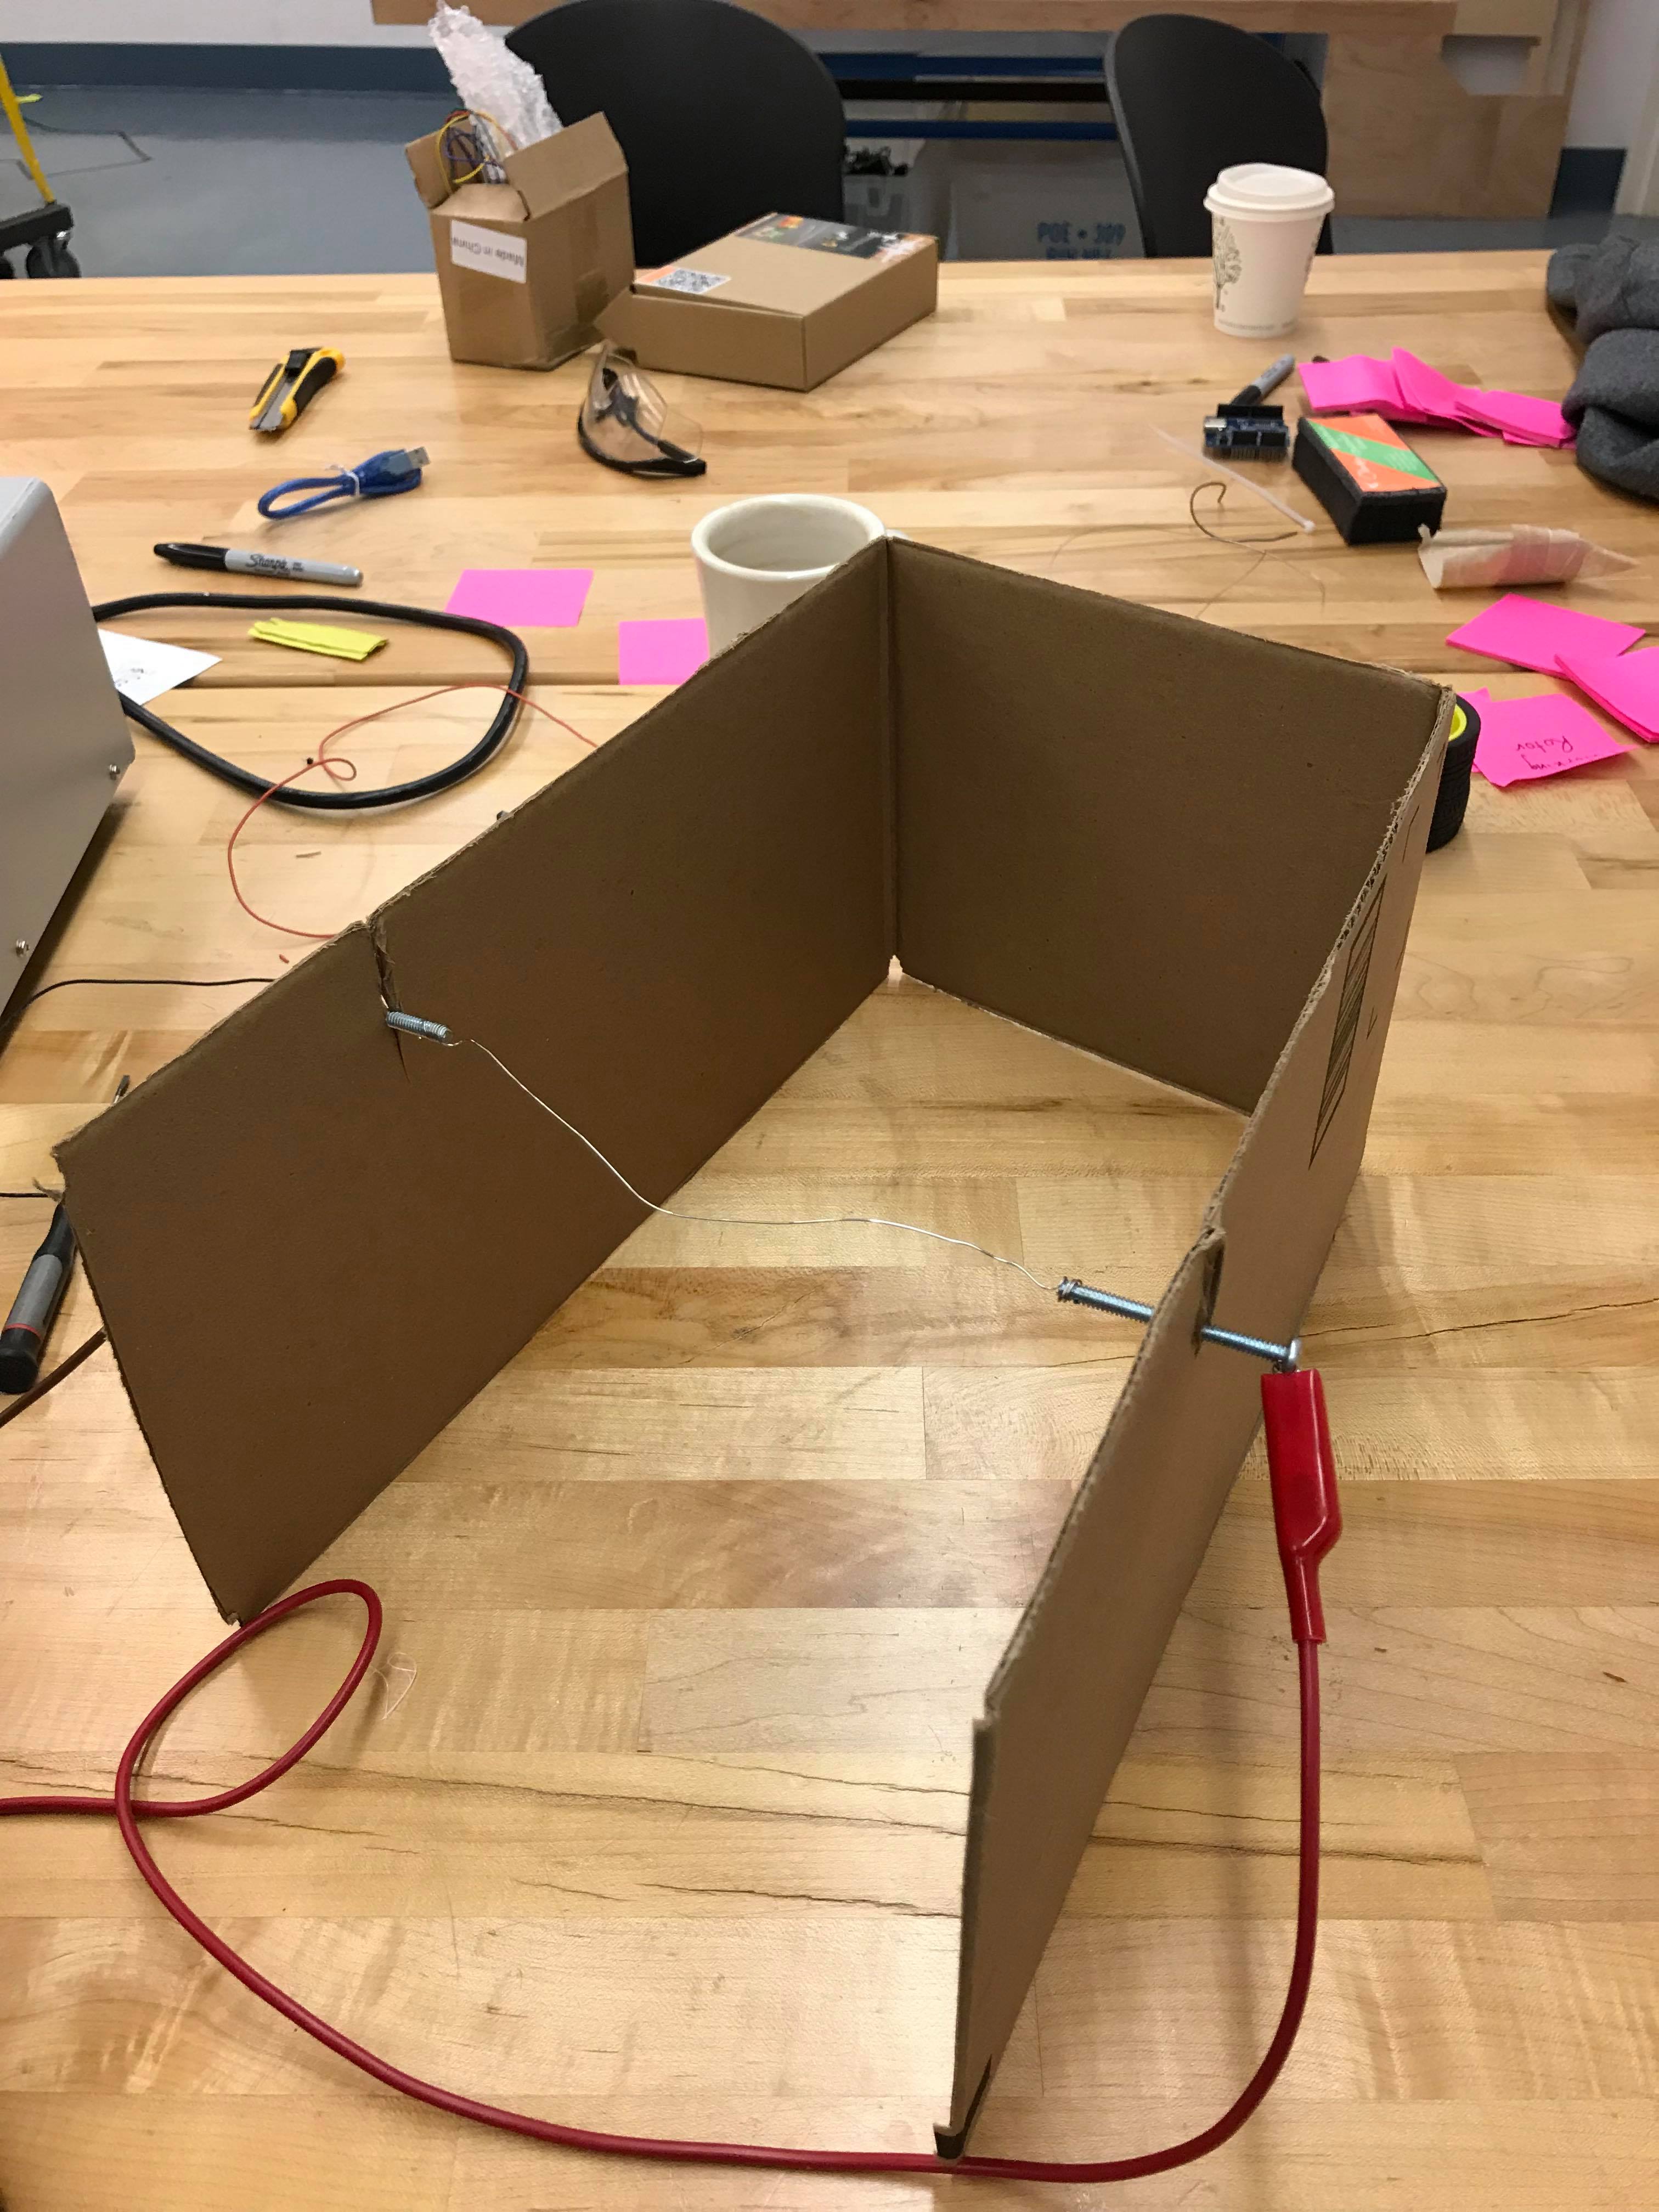 hot wire on cardboard